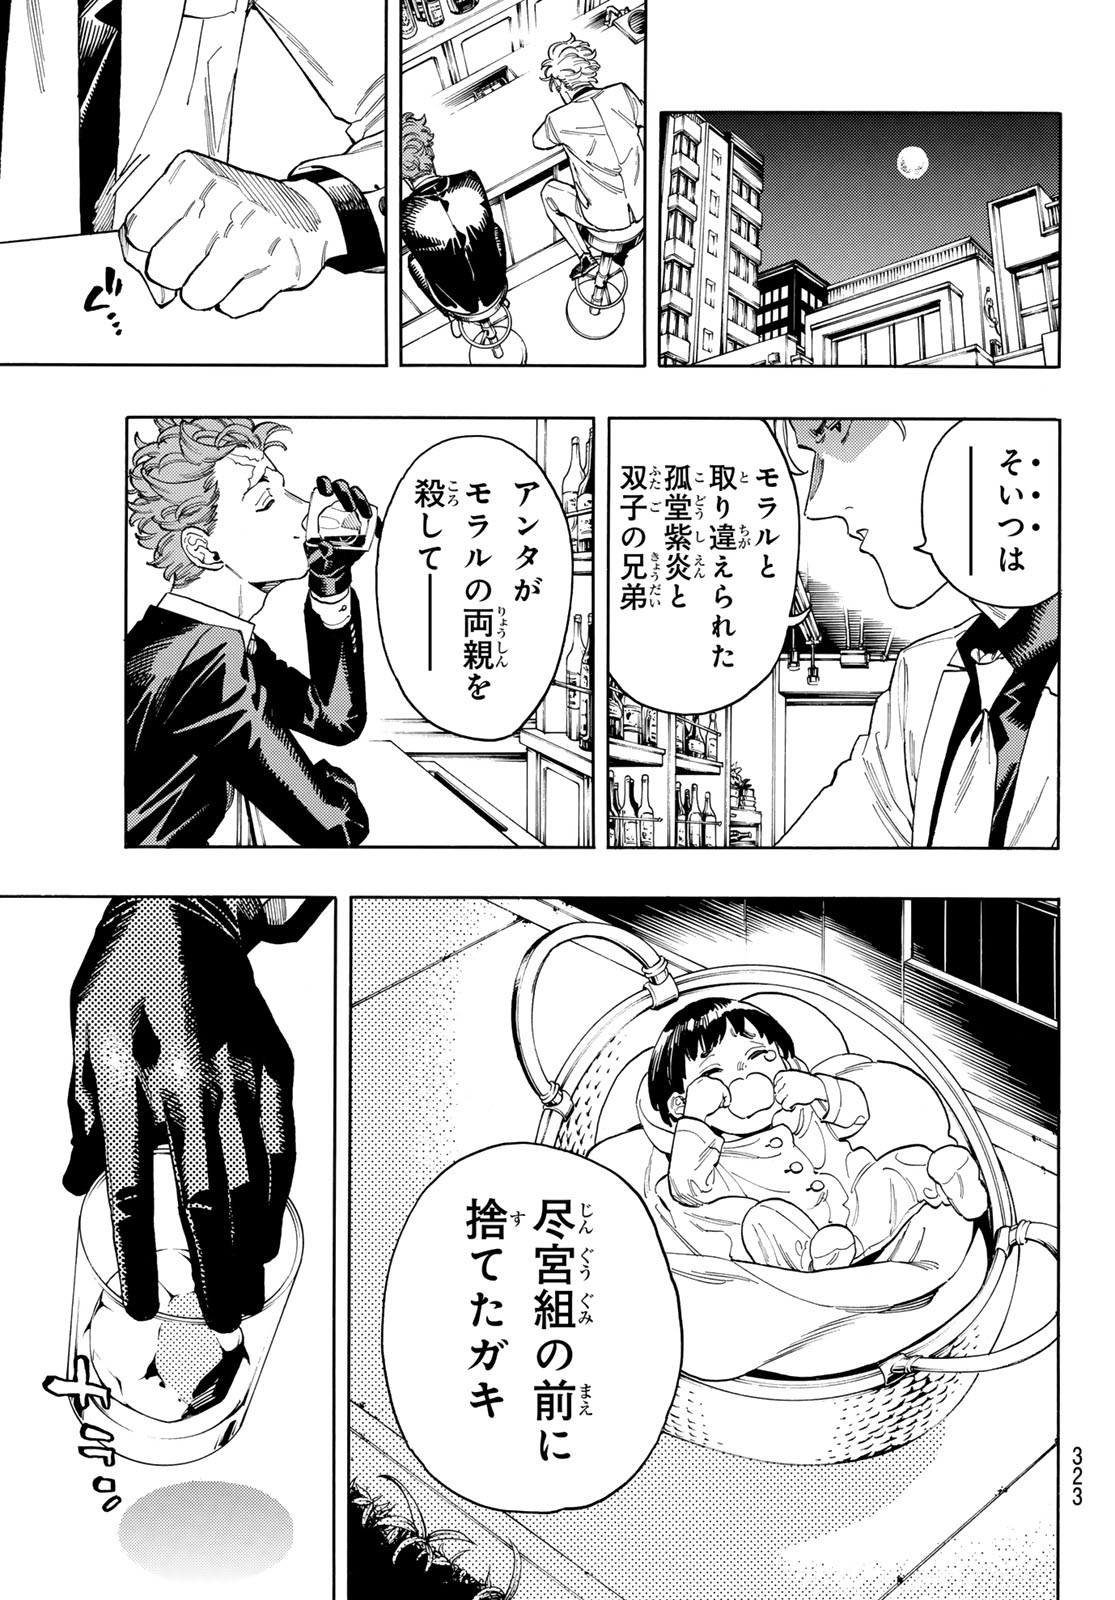 Akabane Honeko no Bodyguard - Chapter 84 - Page 17